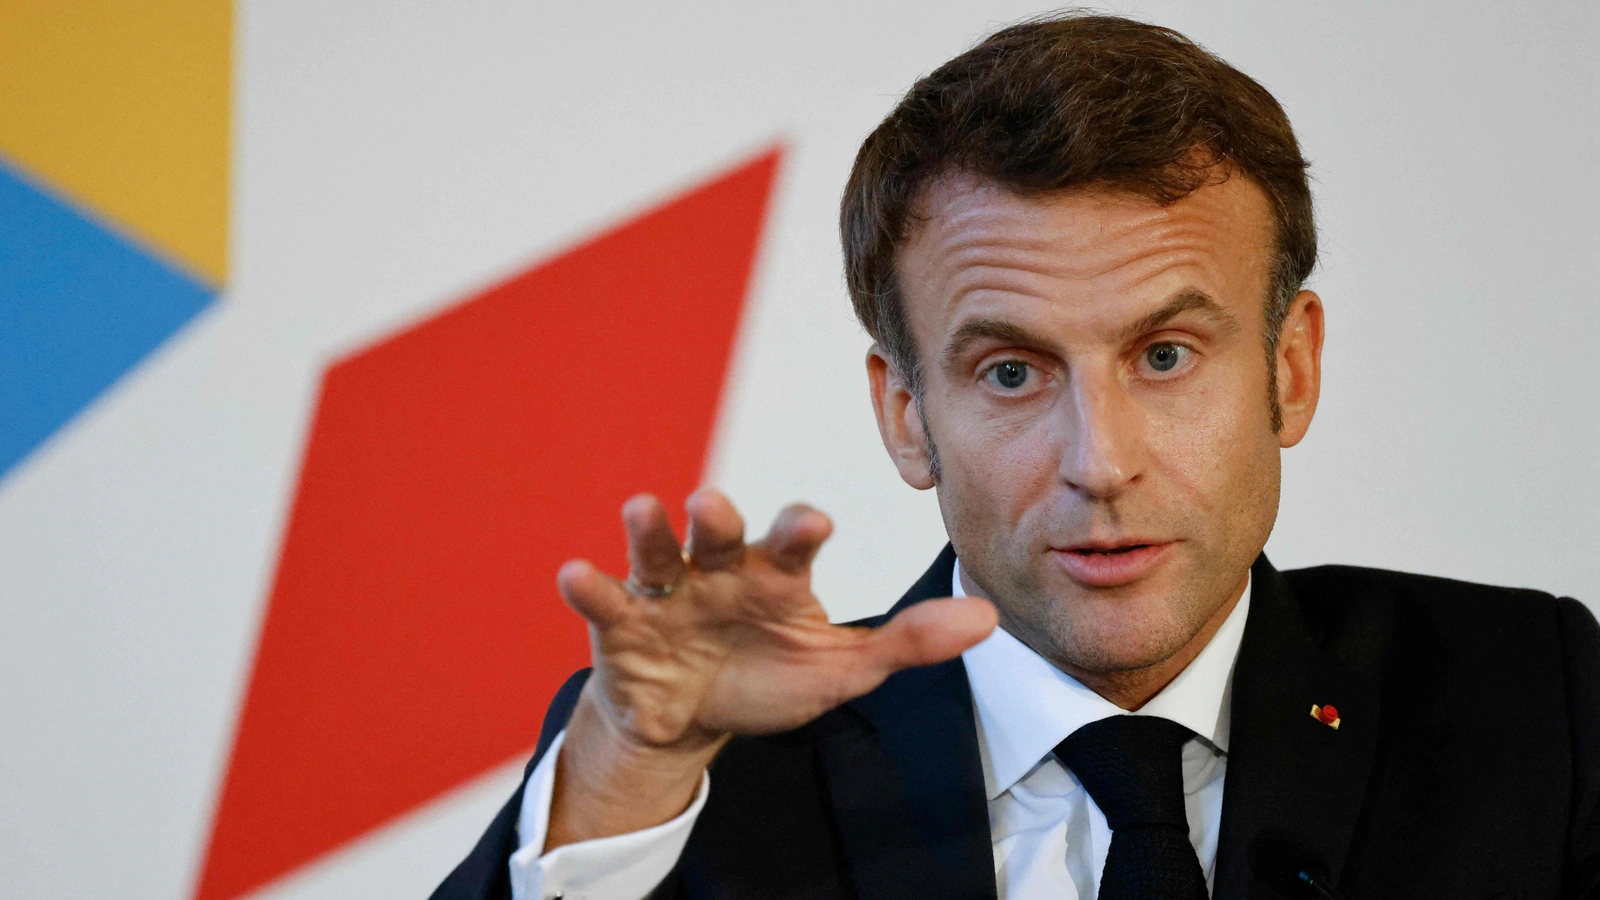 On Russia's 'World War' threat, French president Macron said...